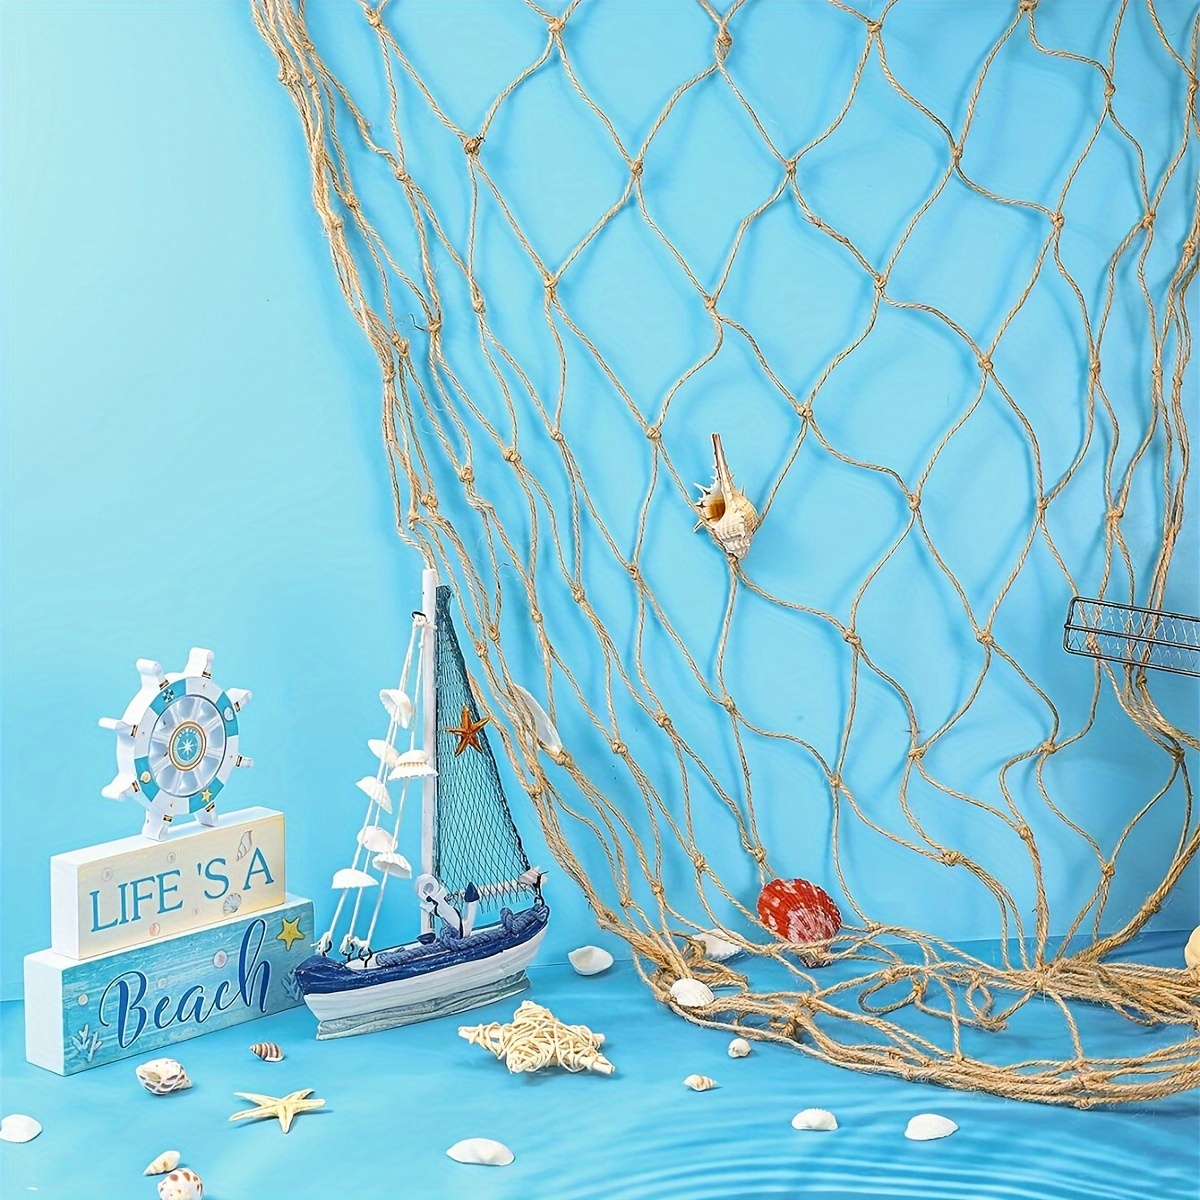 YOAYO Decorative Fish Net, Nautical Fishing Net Decoration for Party,Wall, Blue,200x150cm